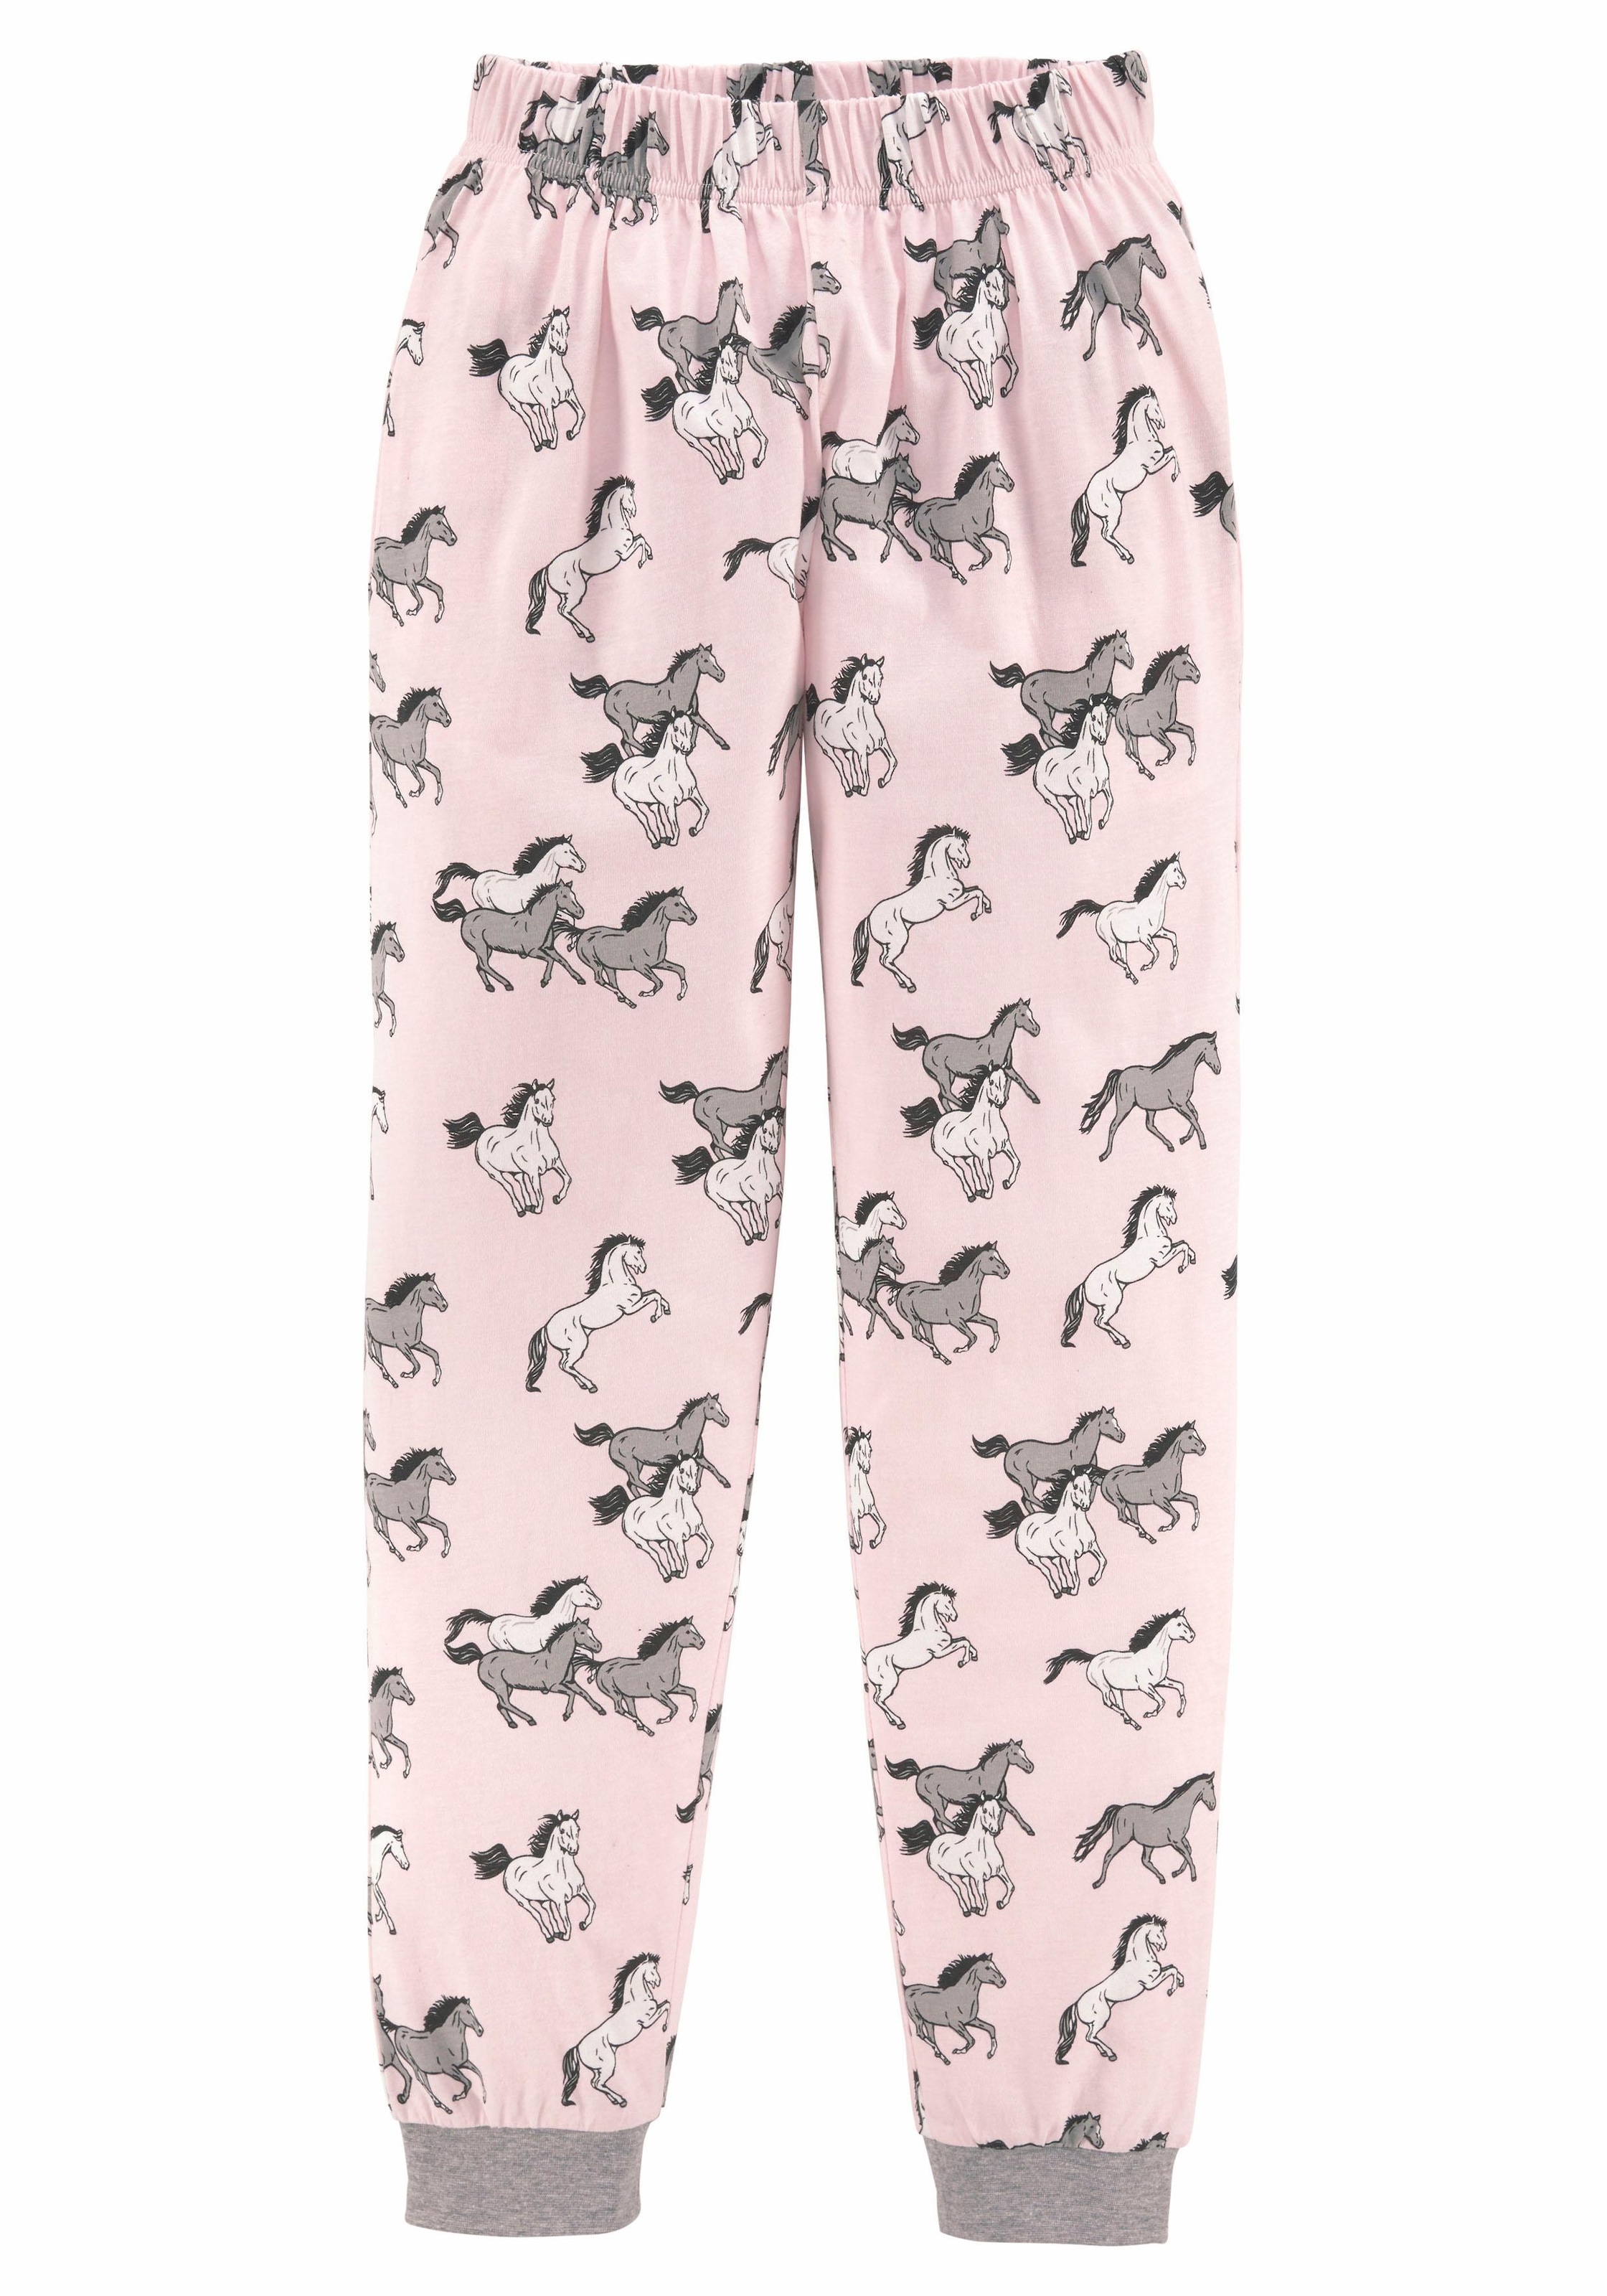 petite fleur Pyjama, (2 Stück), tlg., bei langer Form 1 ♕ Pferde mit Print in